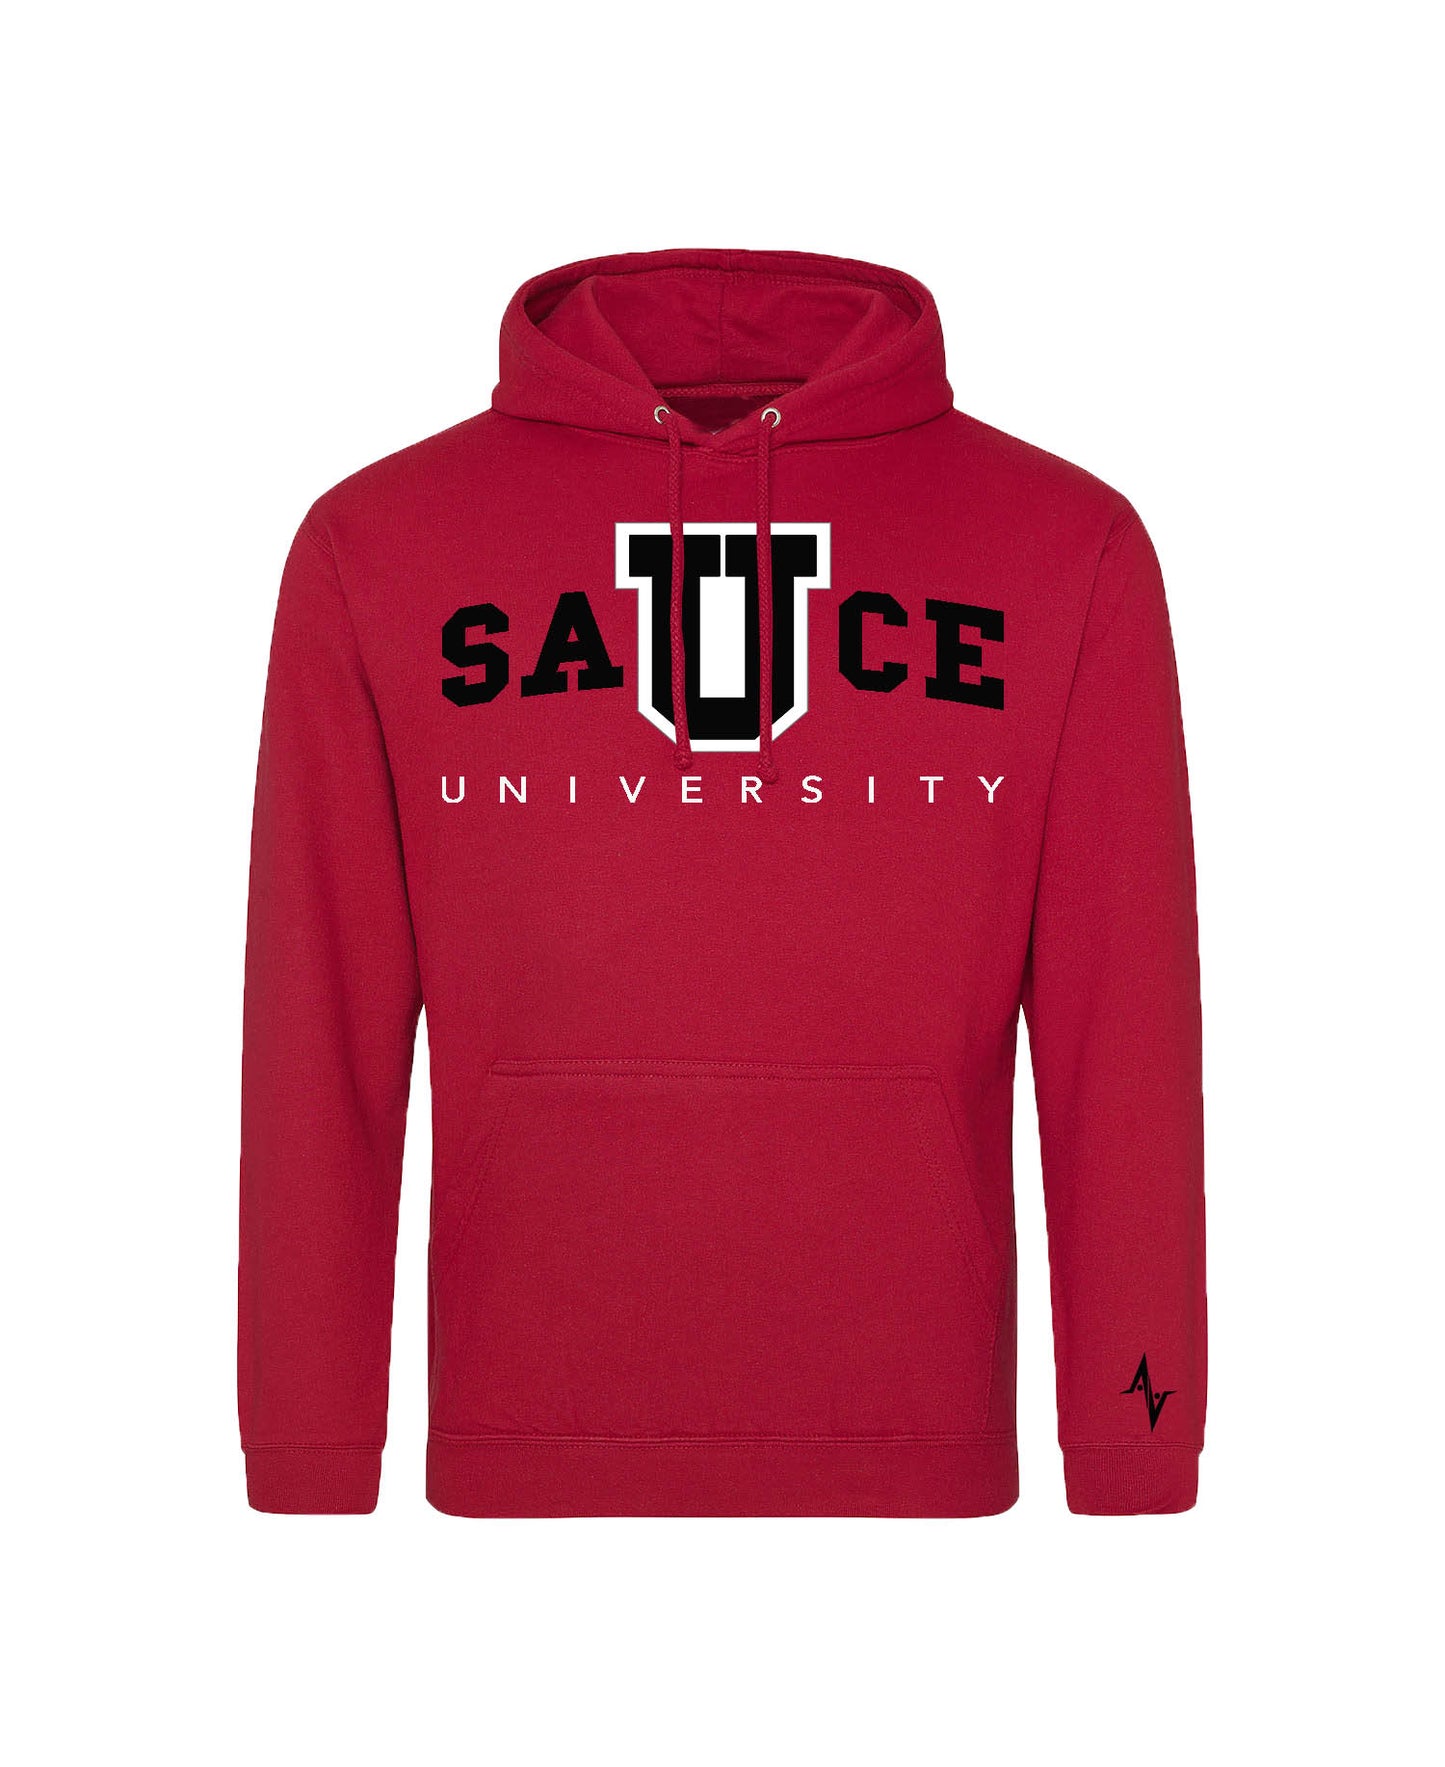 Sauce University Hoodie Red